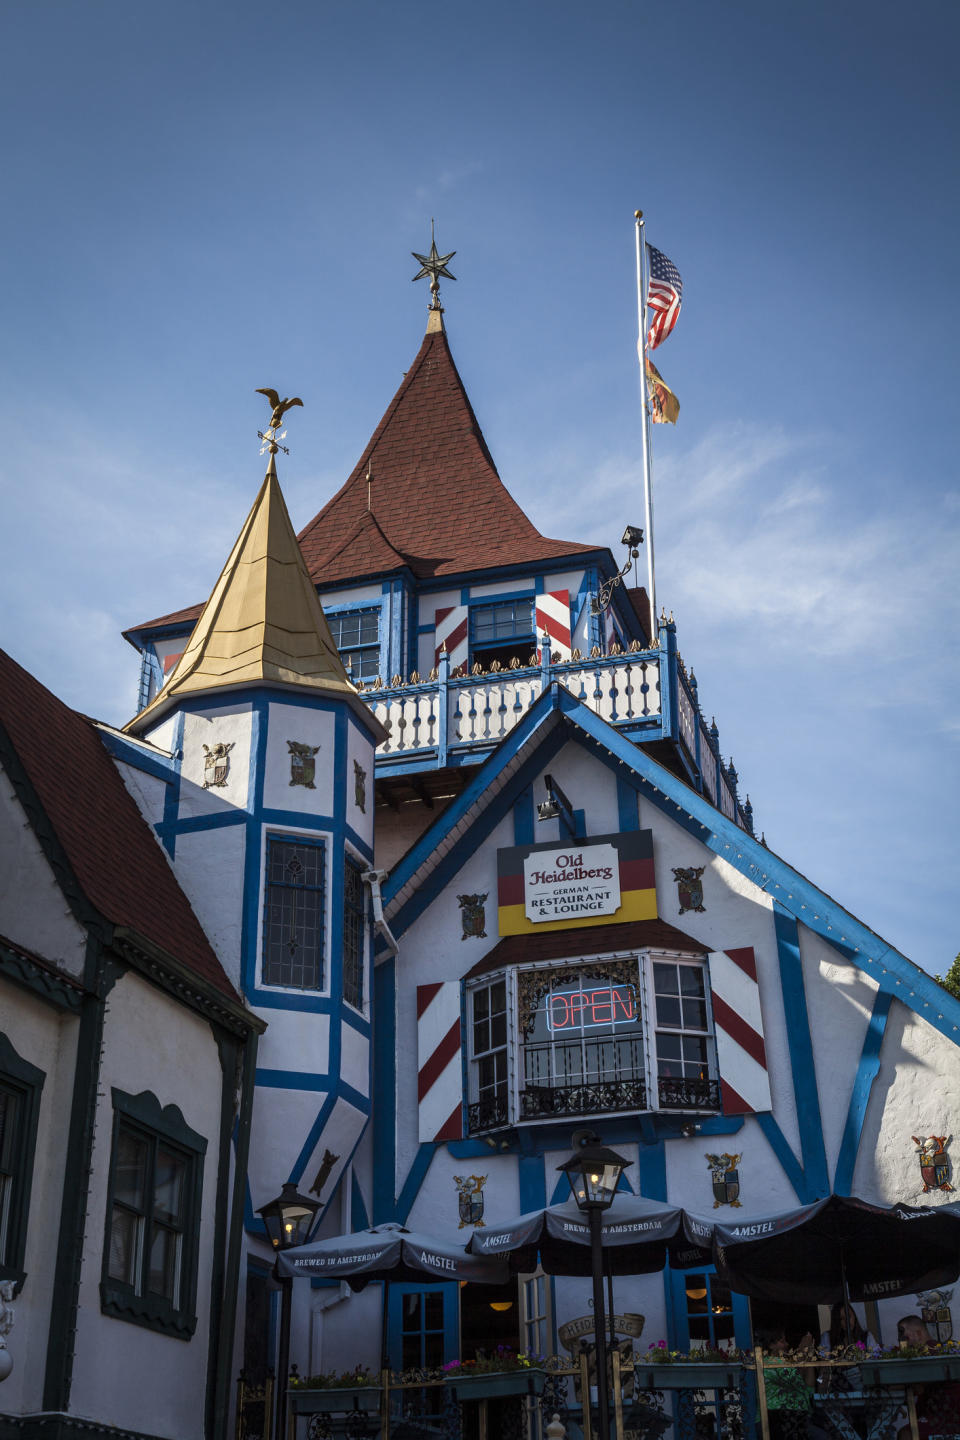 Bavarian-style buildings